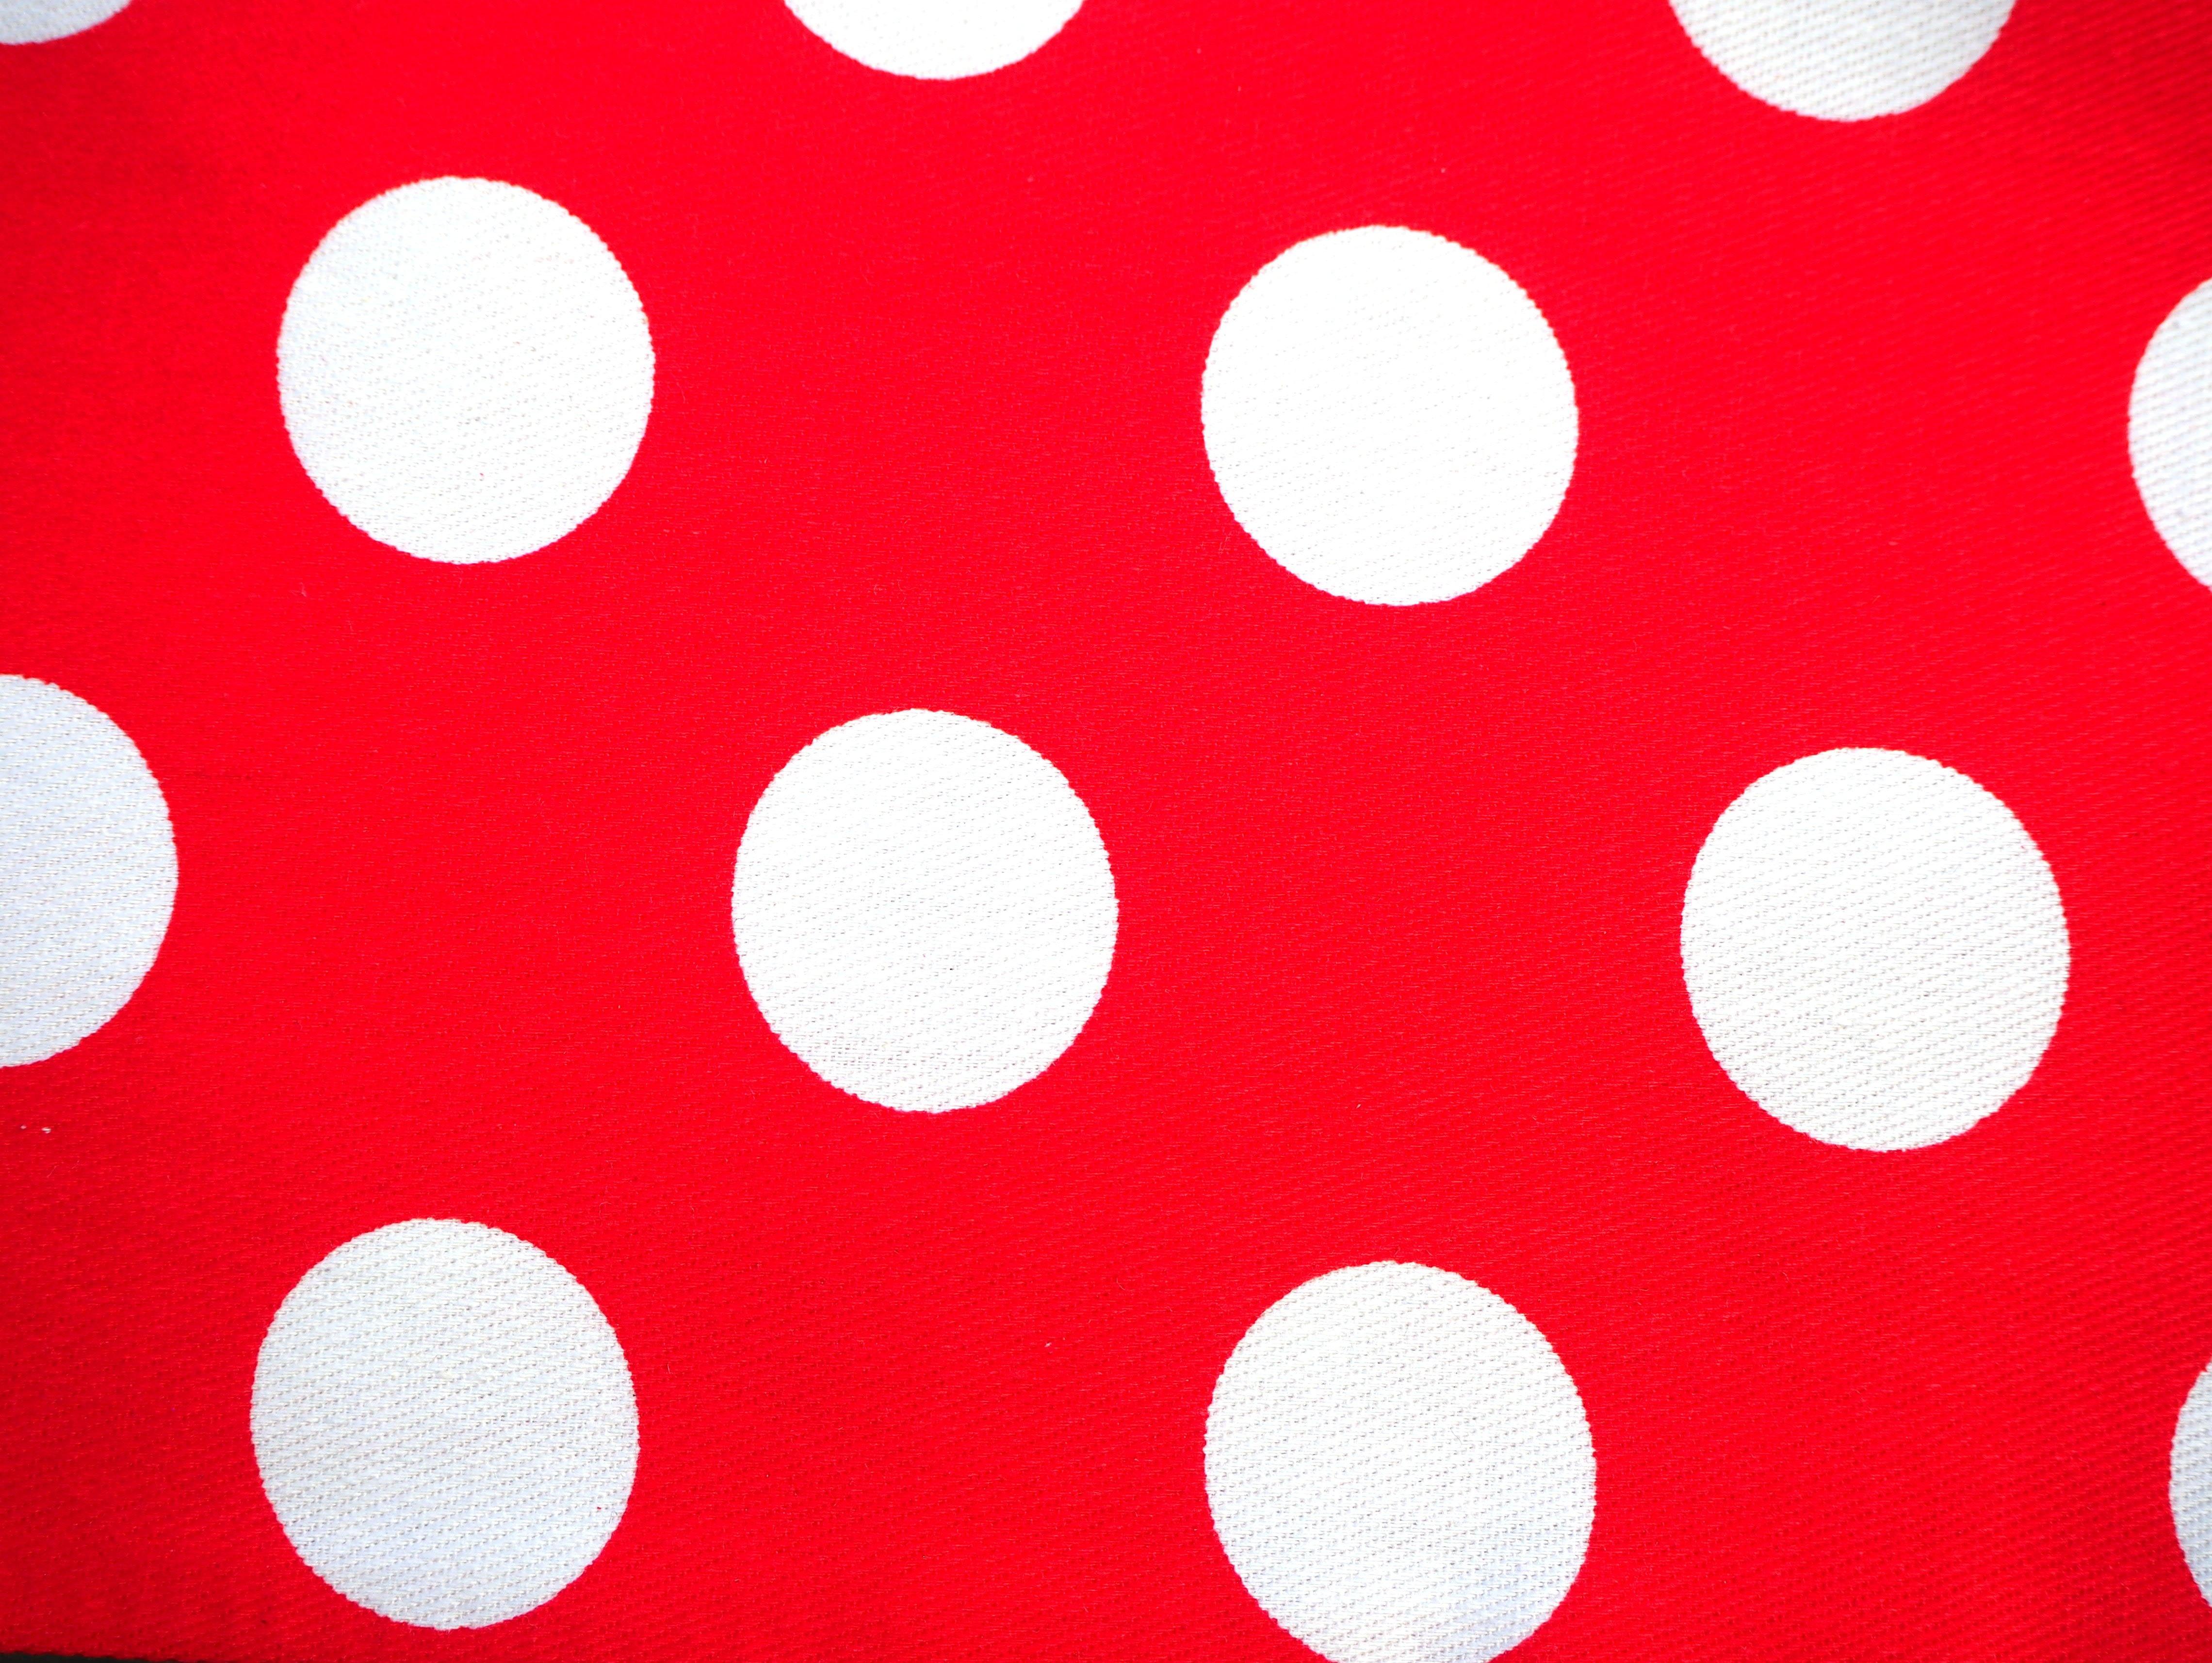 Classic Red & White Polka Dot print, 100% cotton fabric